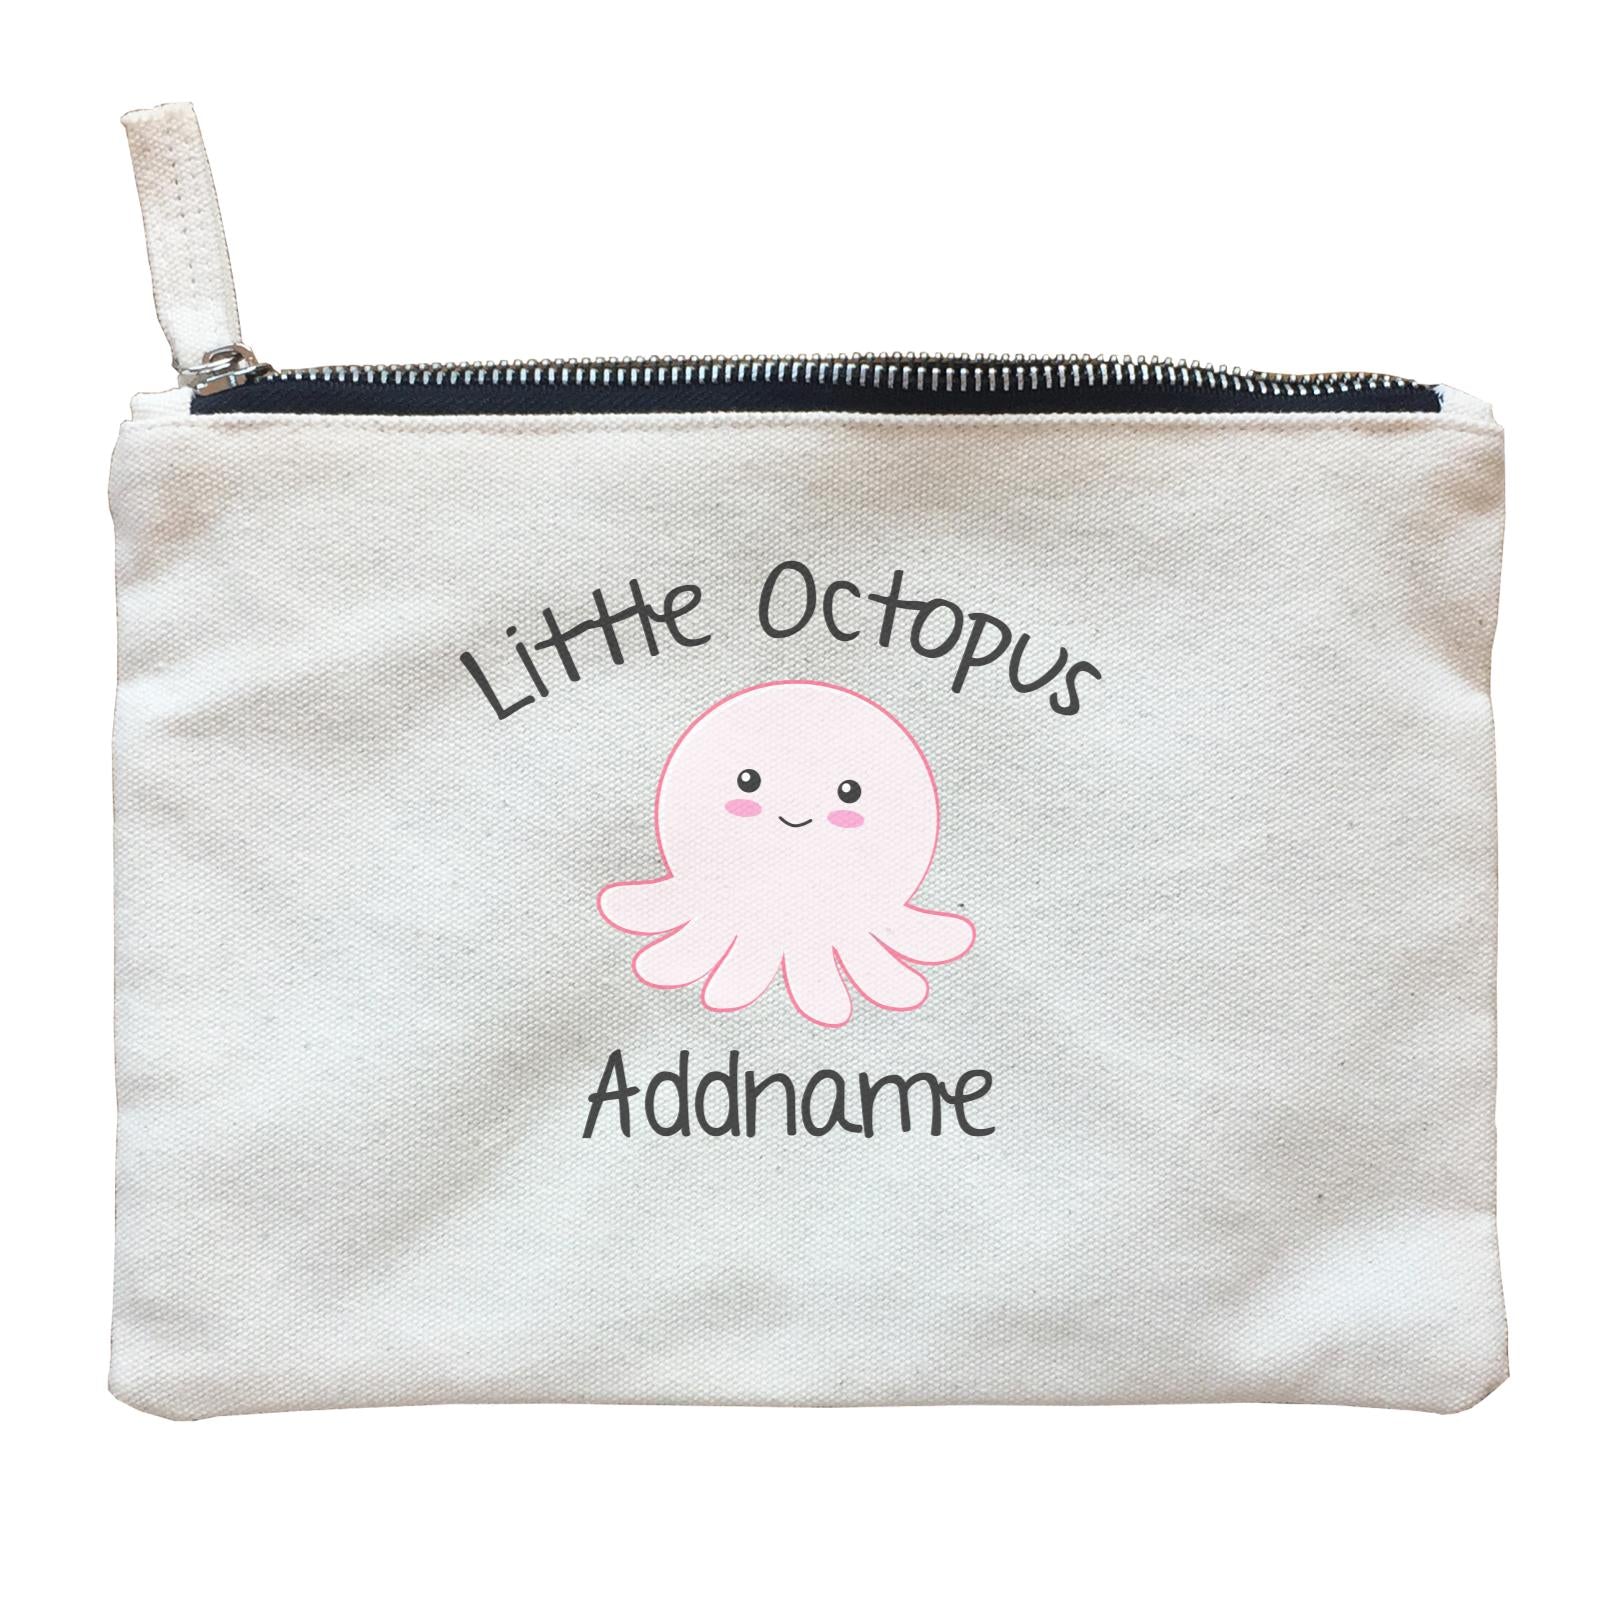 Cute Animals And Friends Series Little Octopus Boy Addname Zipper Pouch